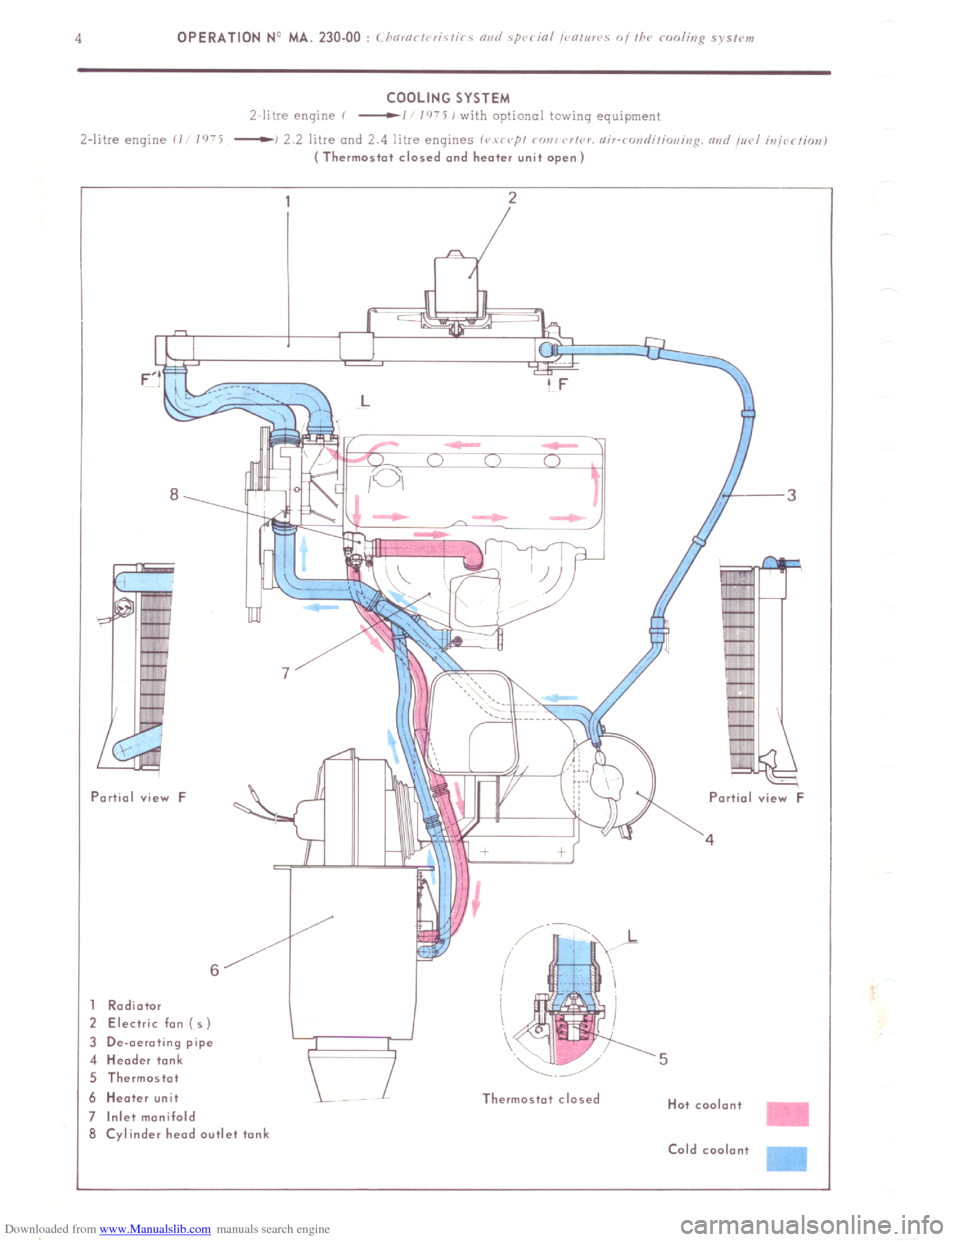 Citroen CX 1981 1.G Workshop Manual Downloaded from www.Manualslib.com manuals search engine - 
- 
‘F 
L 
Radiator 
! Electric fan ( 5) 
I De-oeroting pipe 
I Header tank 
i Thermostot 
I Heater unit 
Inlet manifold 
i Cylinder head o